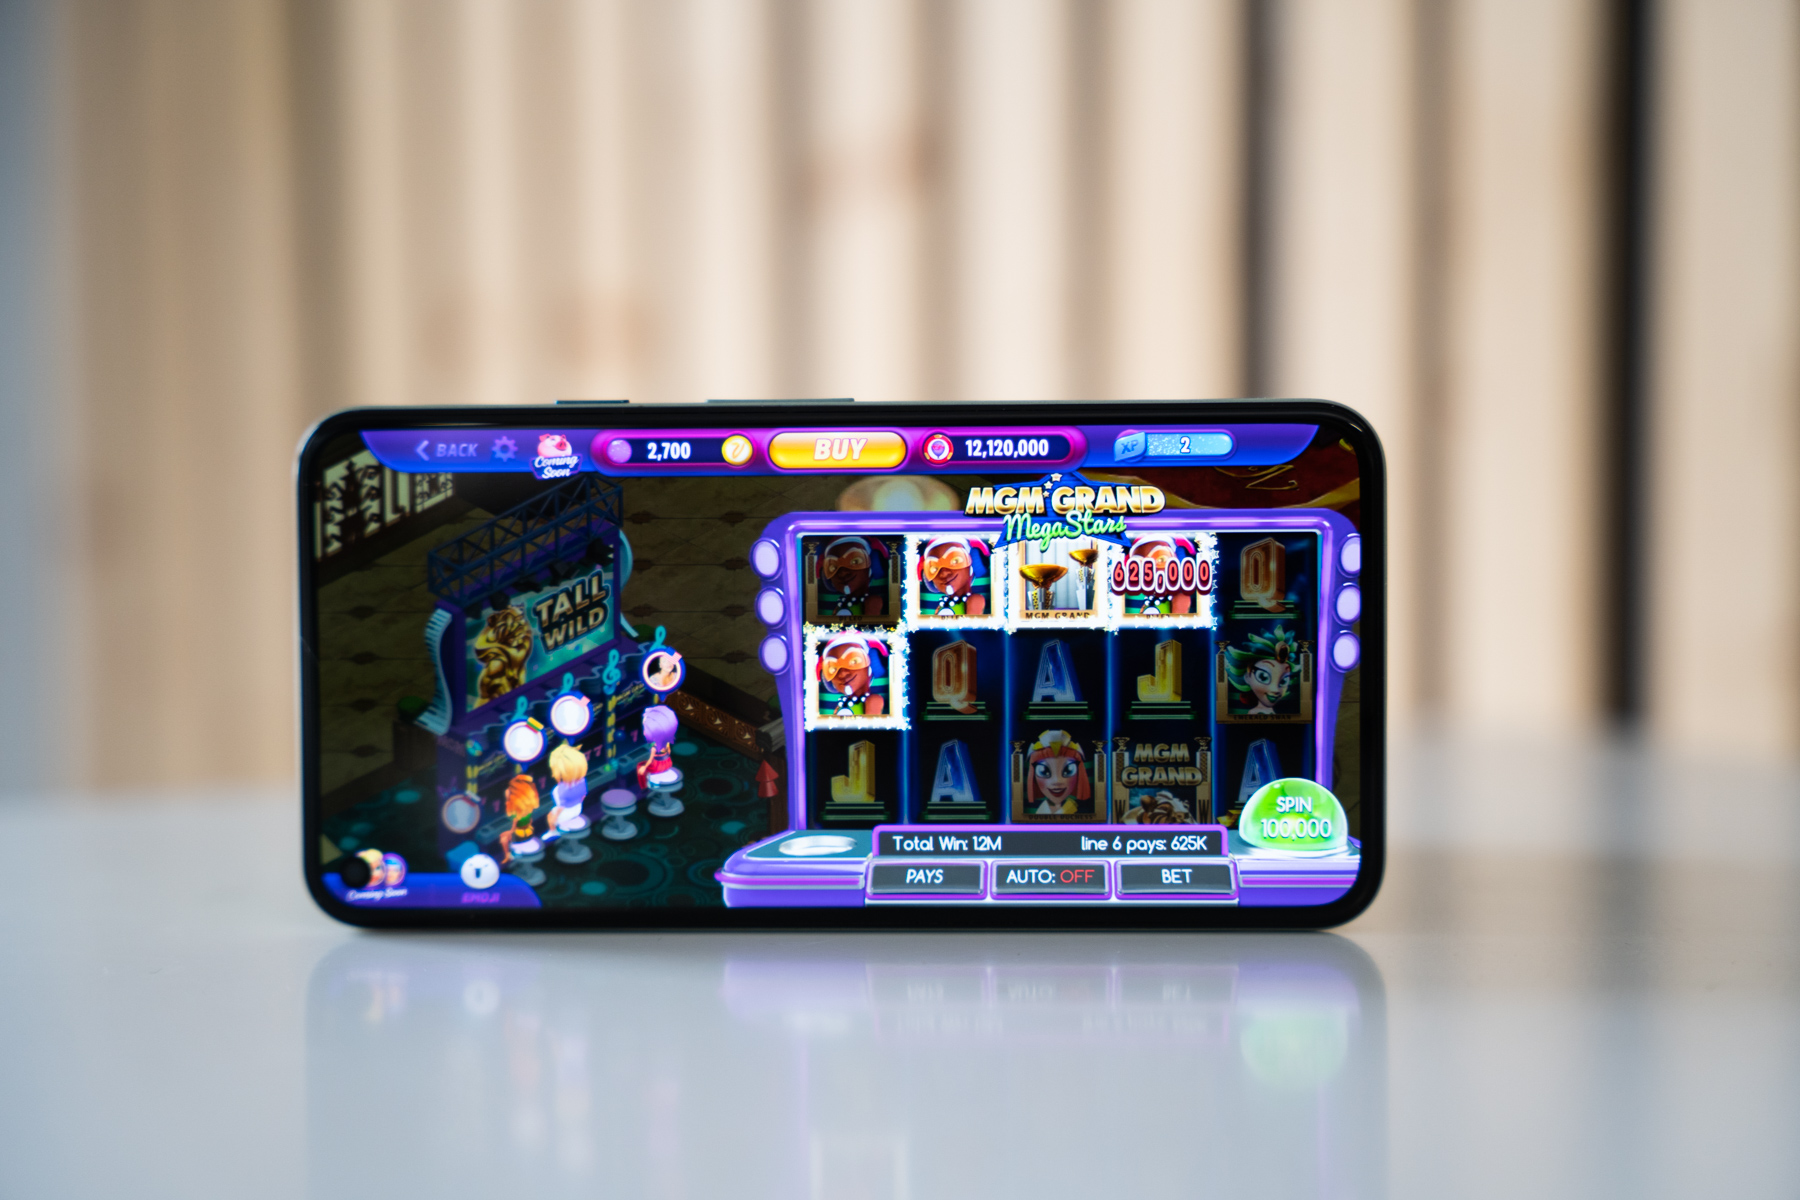 Mobile Gambling Apps